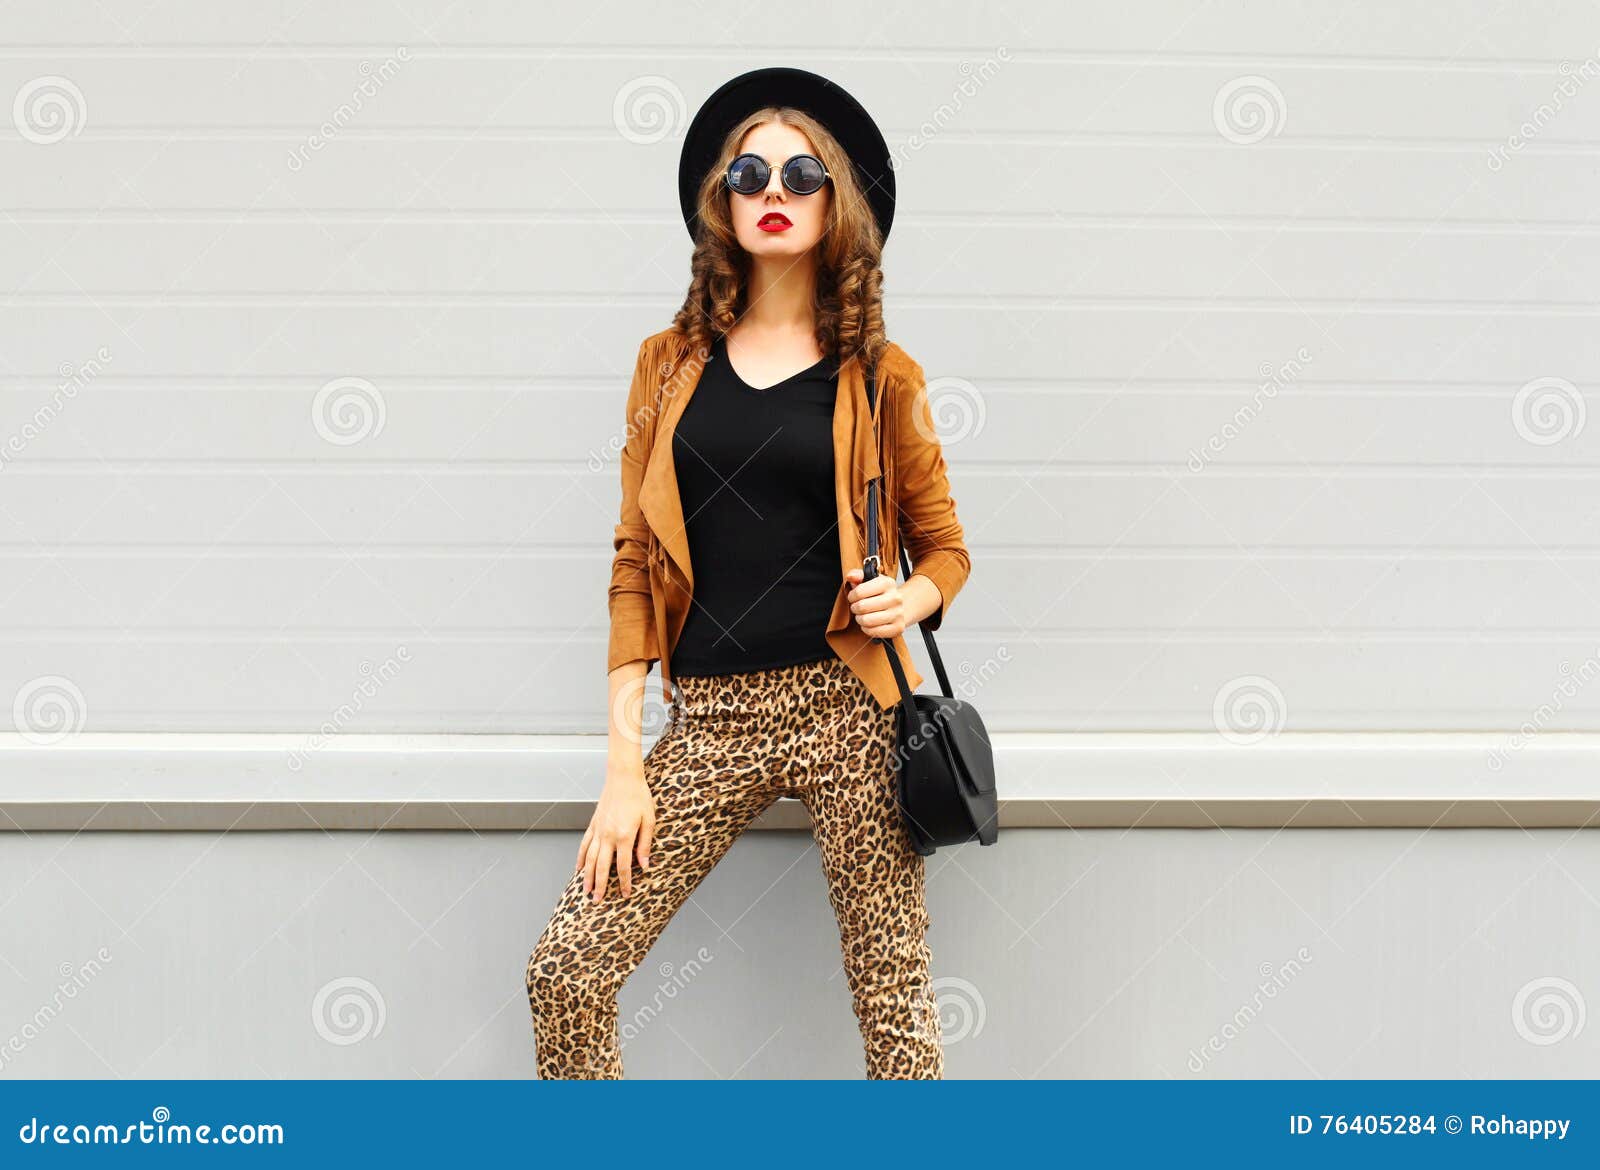 fashion look, pretty woman wearing a retro elegant hat, sunglasses, brown jacket and black handbag over background